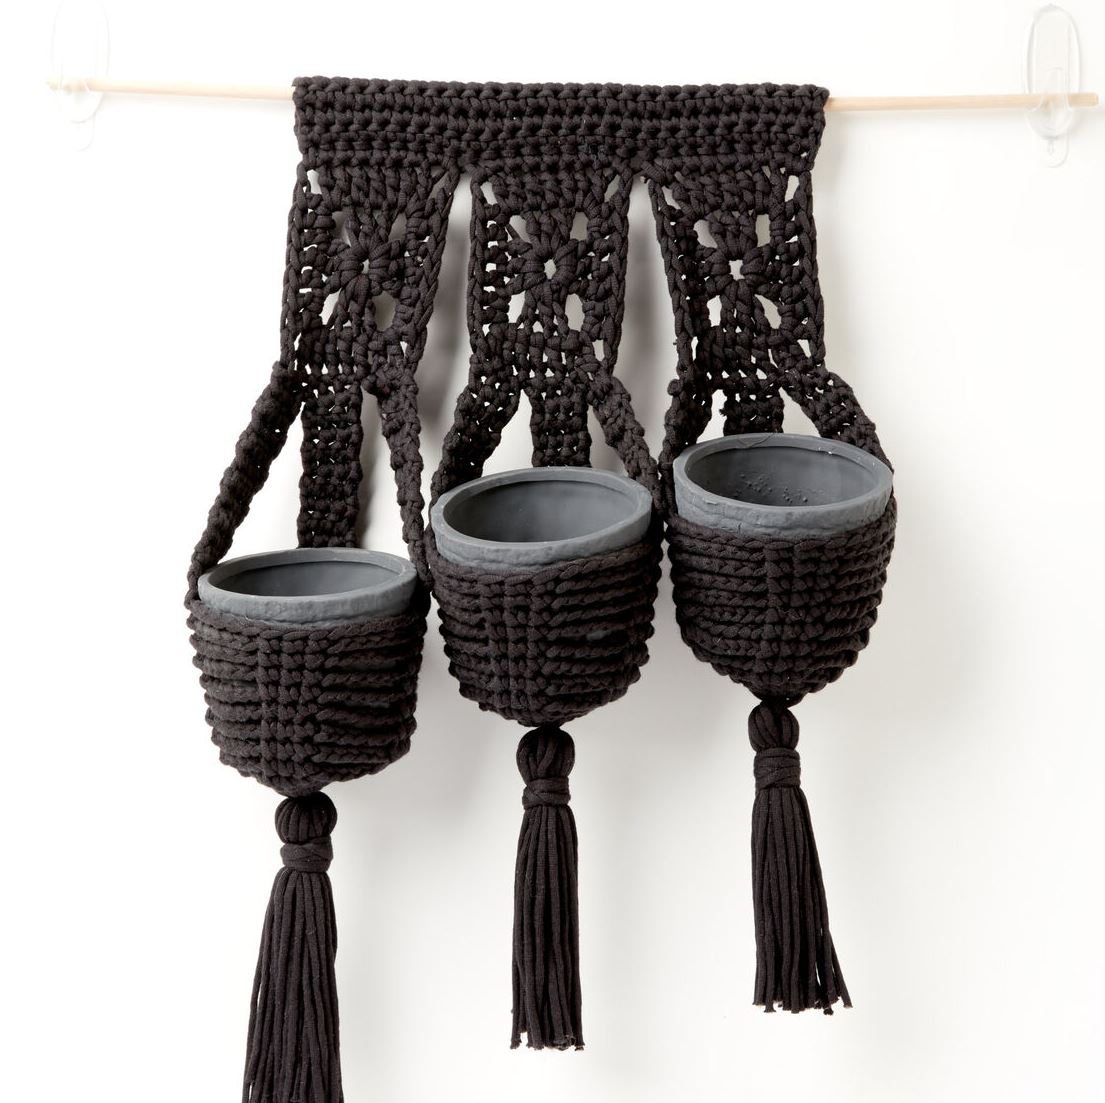 Crochet Hanging Plant Trio - Free Crochet Pattern